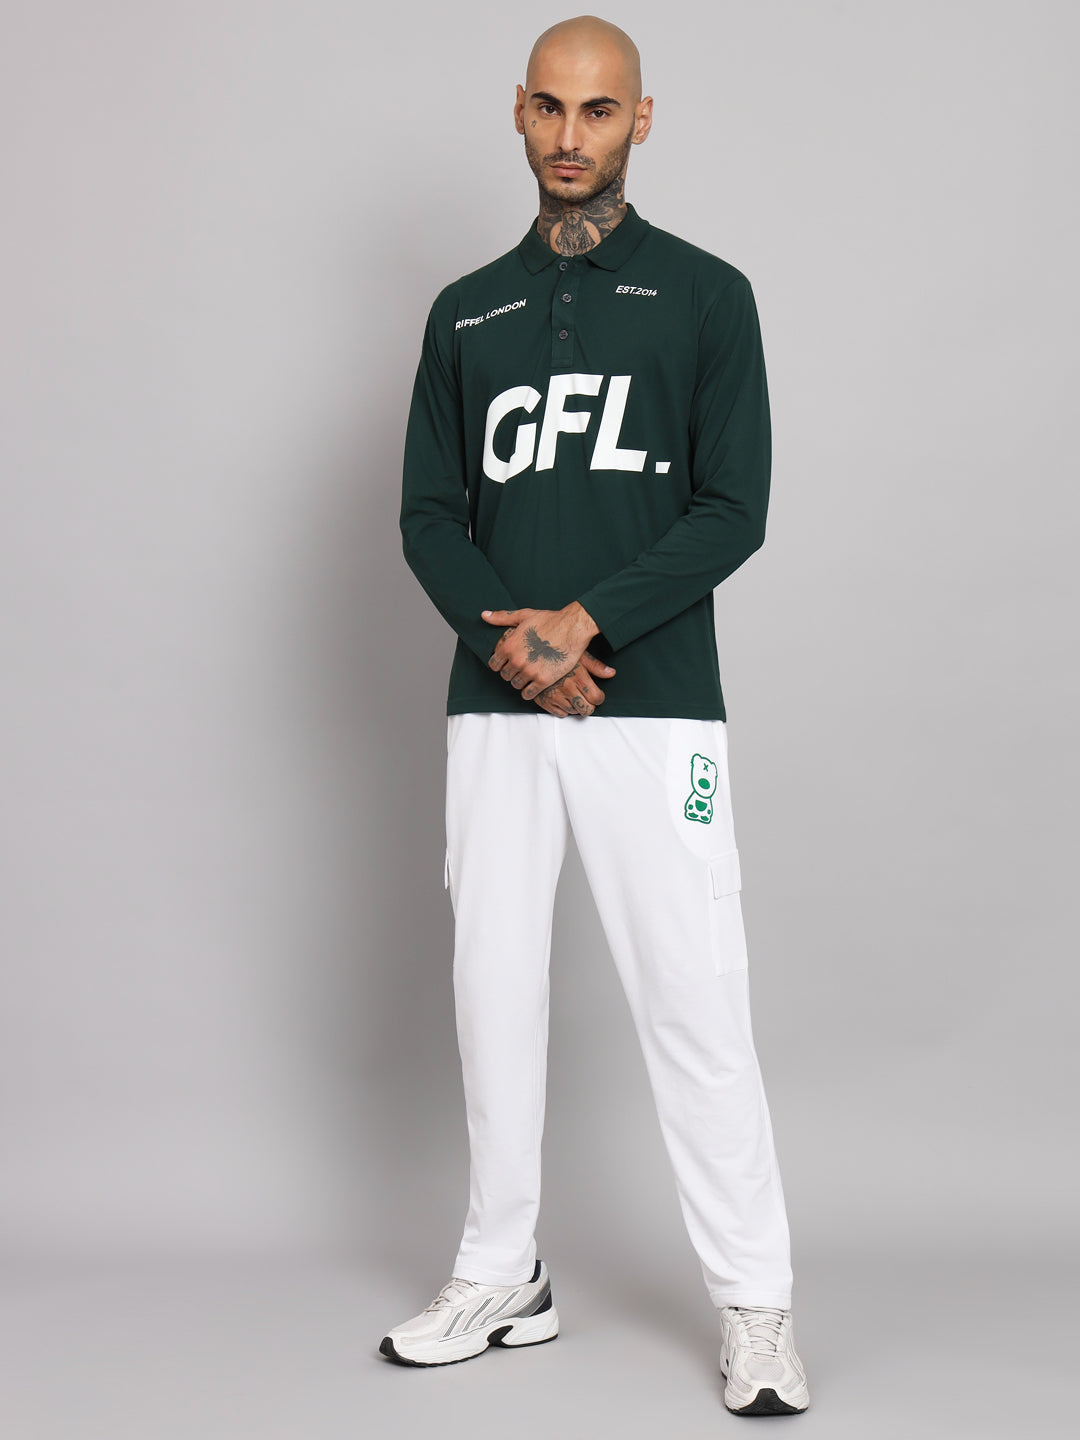 GRIFFEL Men's Green GFL Printed Cotton Full Sleeve Polo T-shirt - griffel